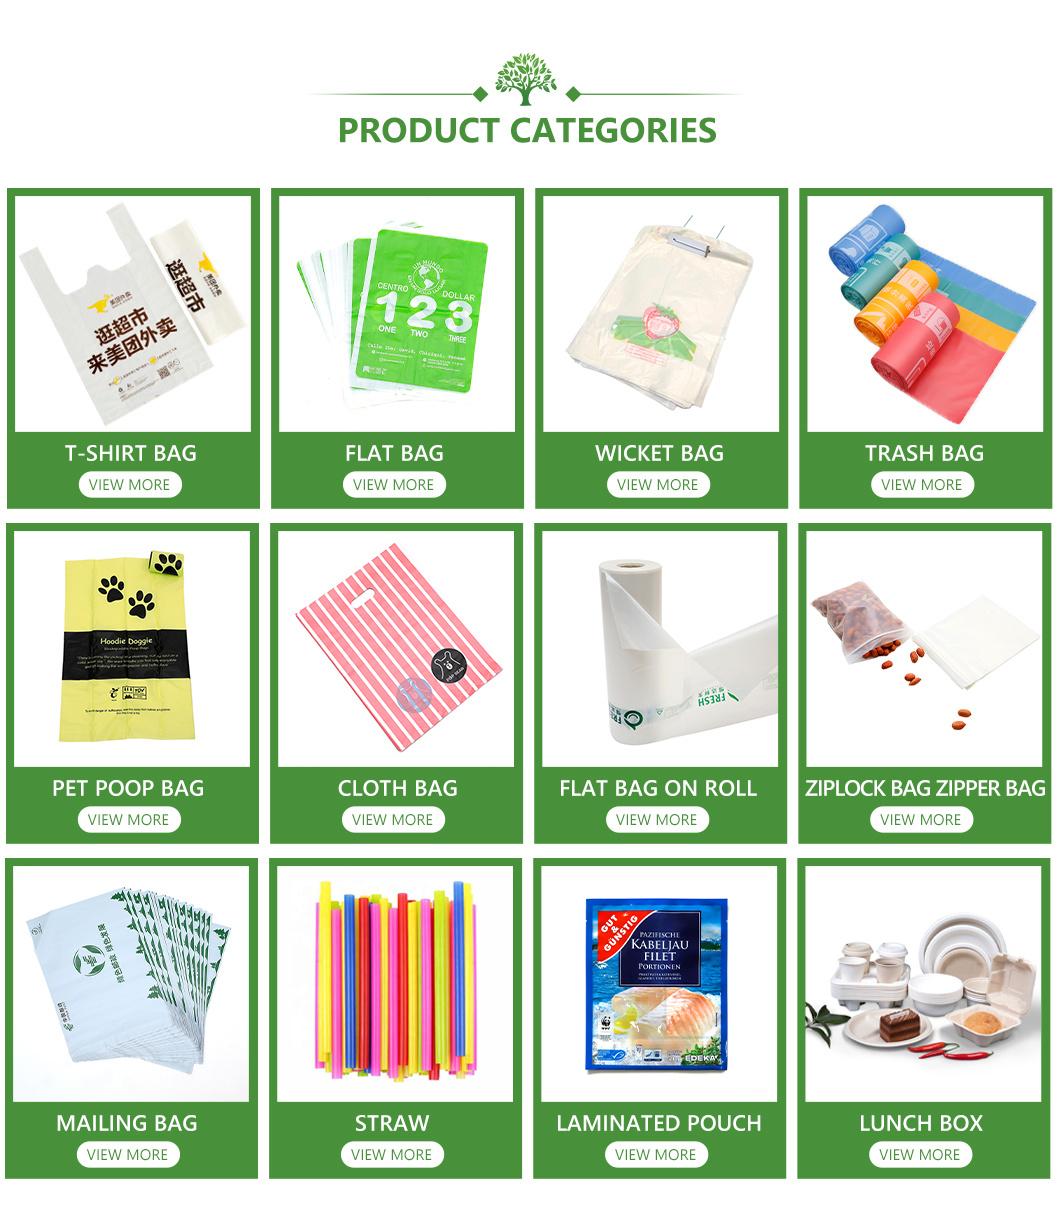 PLA+Pbat/Pbat+Corn Starch Biodegradable Bags, Compostable Bags, Food Bags for Supermarket